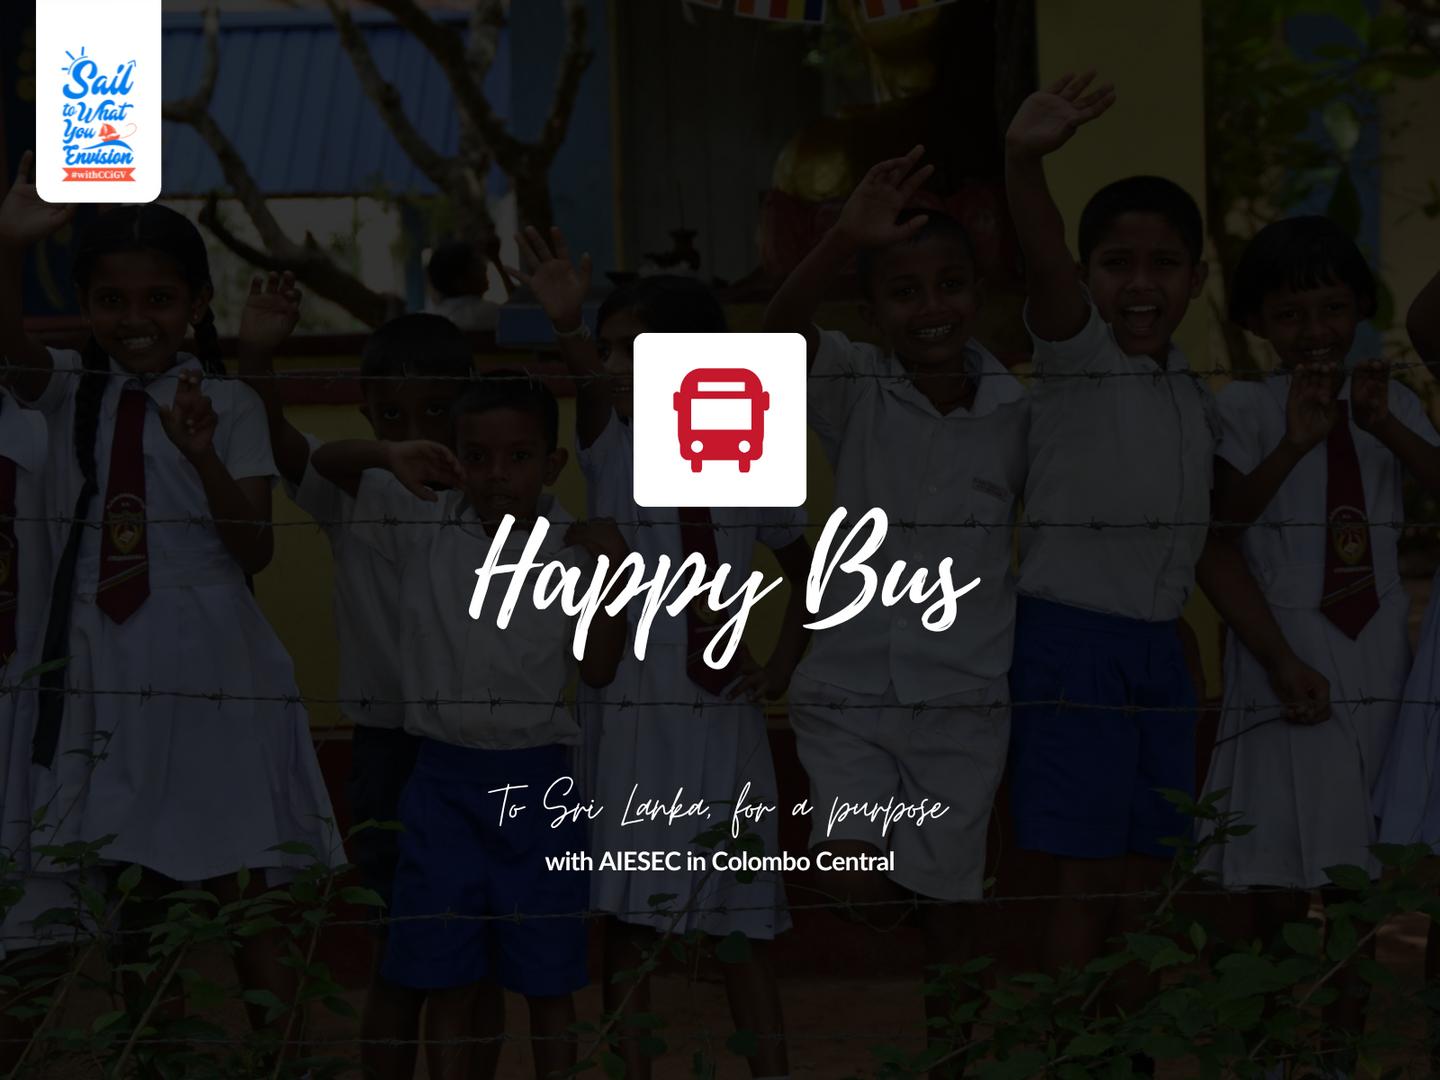 Image: Happy Bus